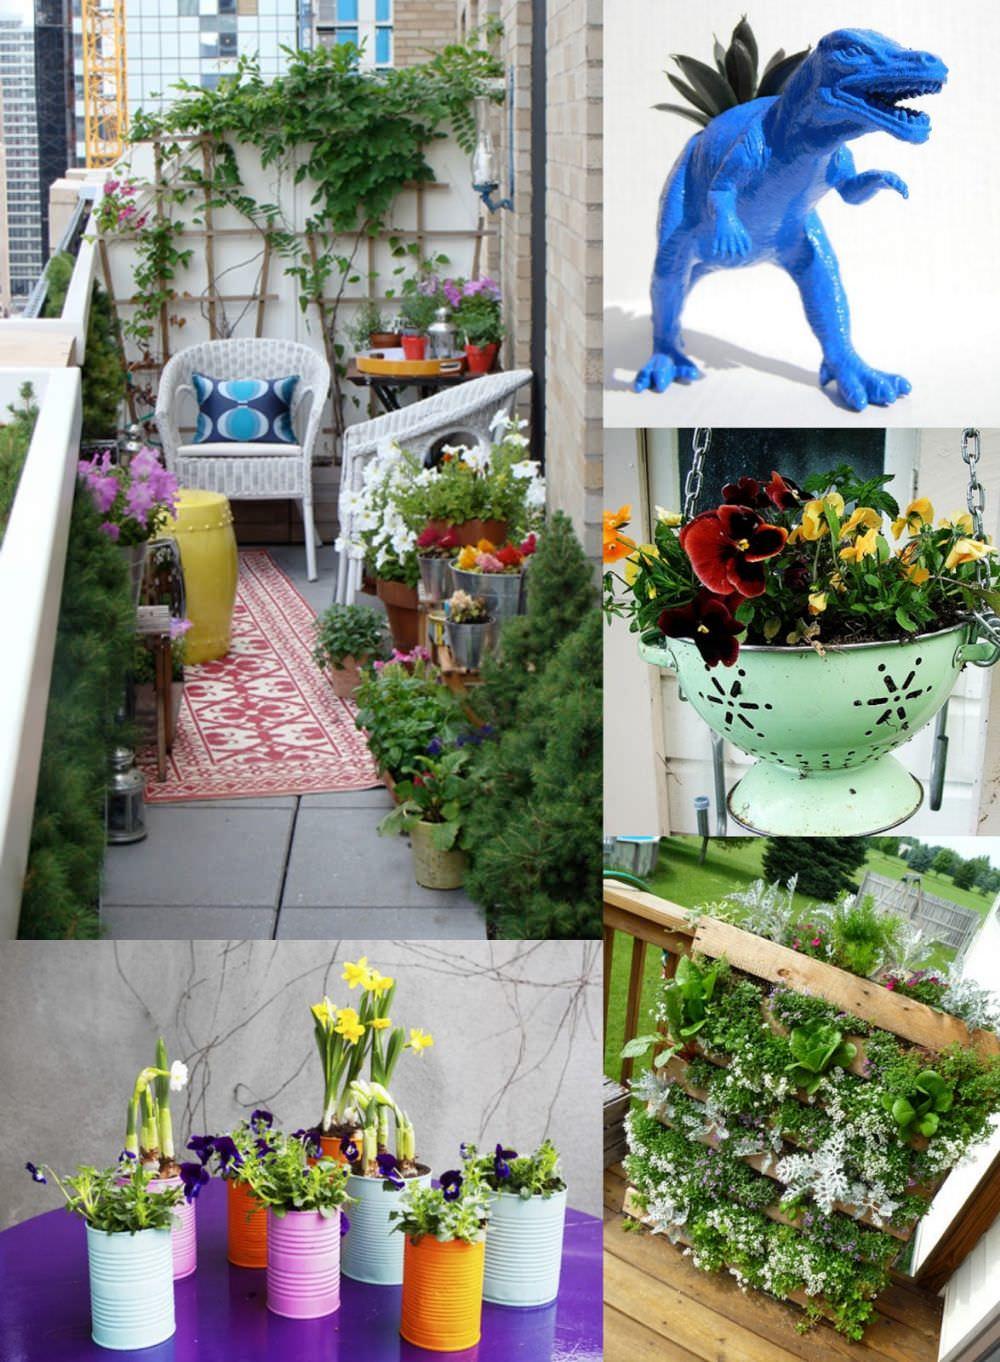 Dekoratif bahçe ve balkon aksesuar modelleri modelleri